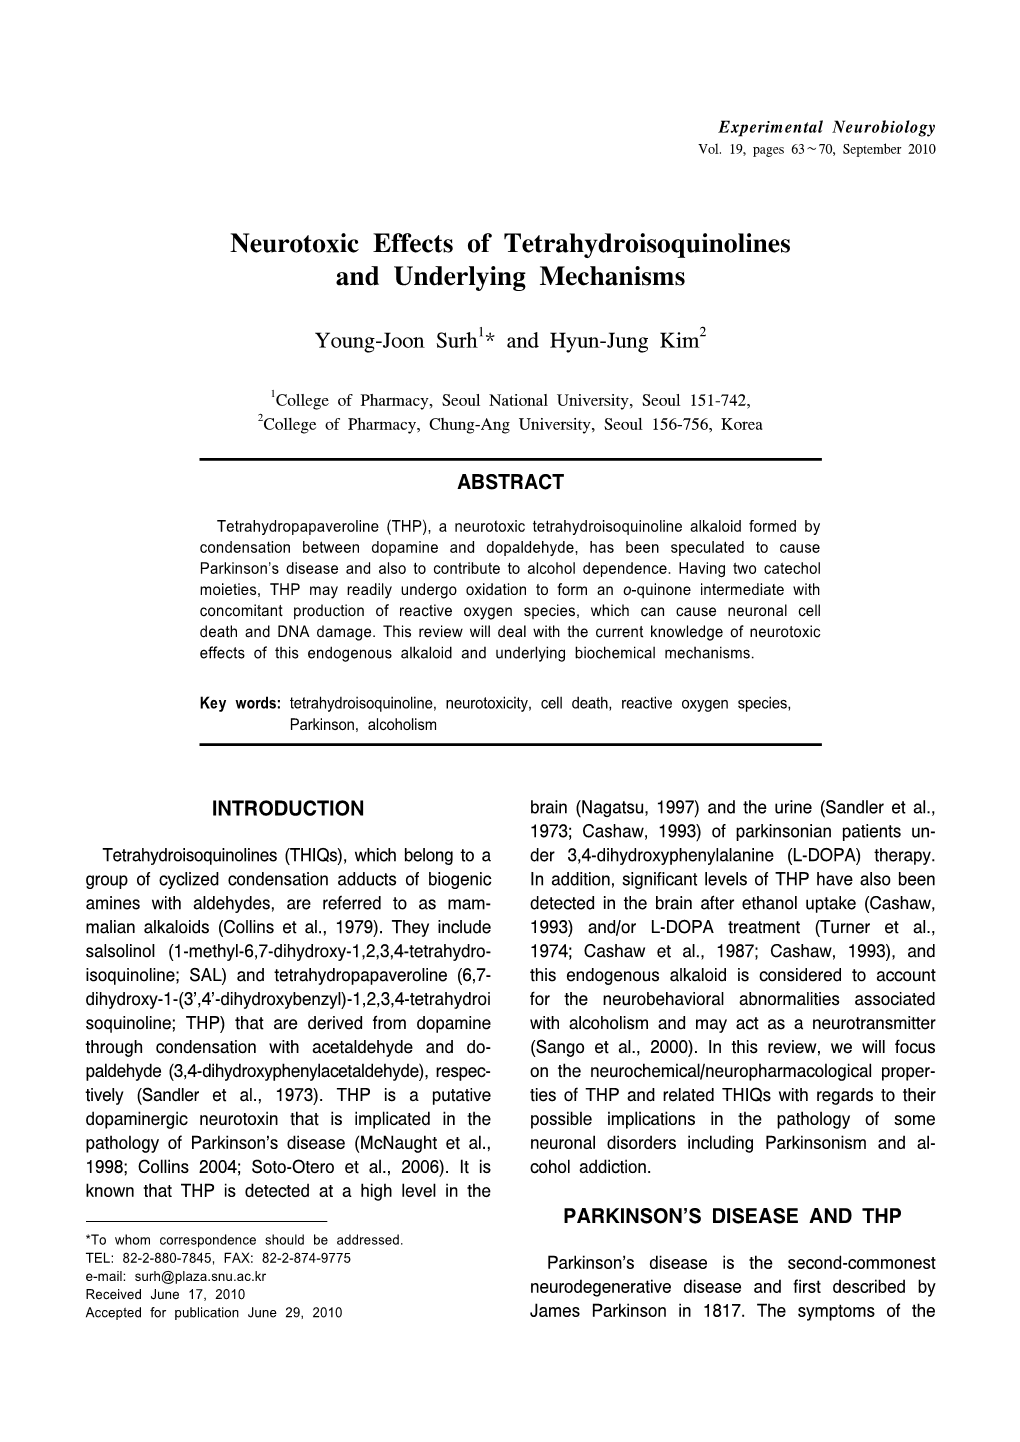 Neurotoxic Effects of Tetrahydroisoquinolines and Underlying Mechanisms